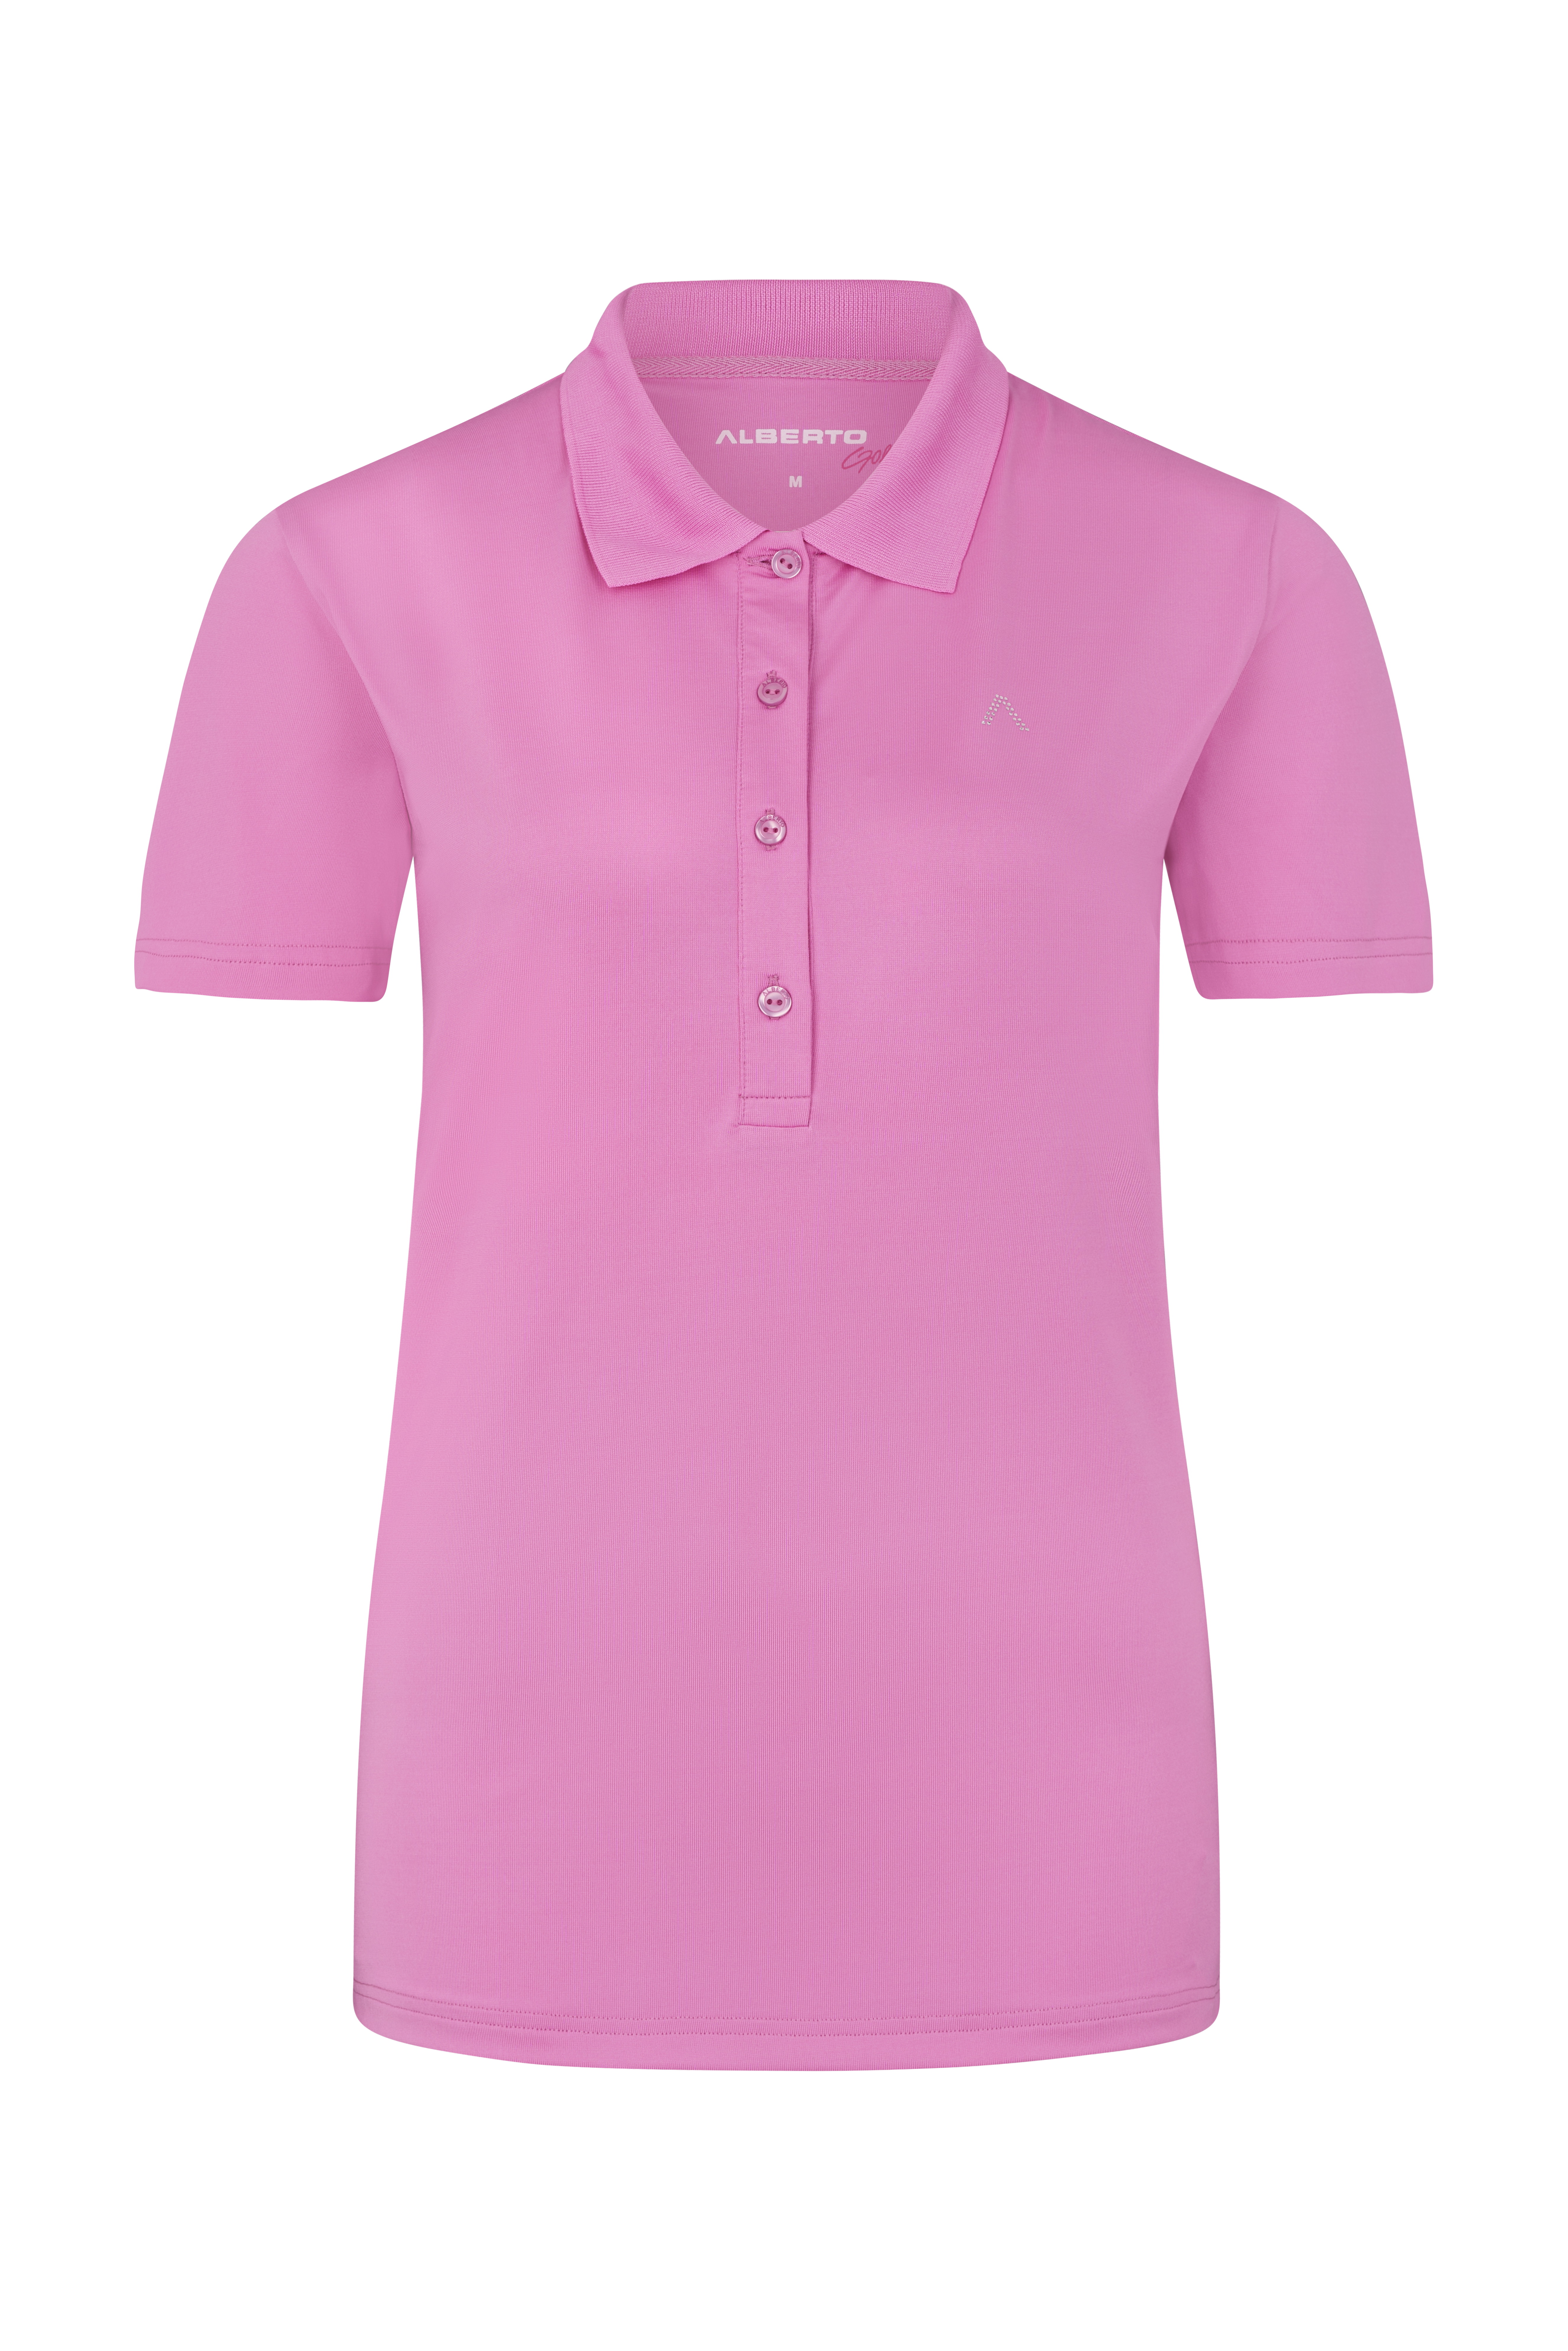 Alberto EVA Dry Comfort Polo, pink